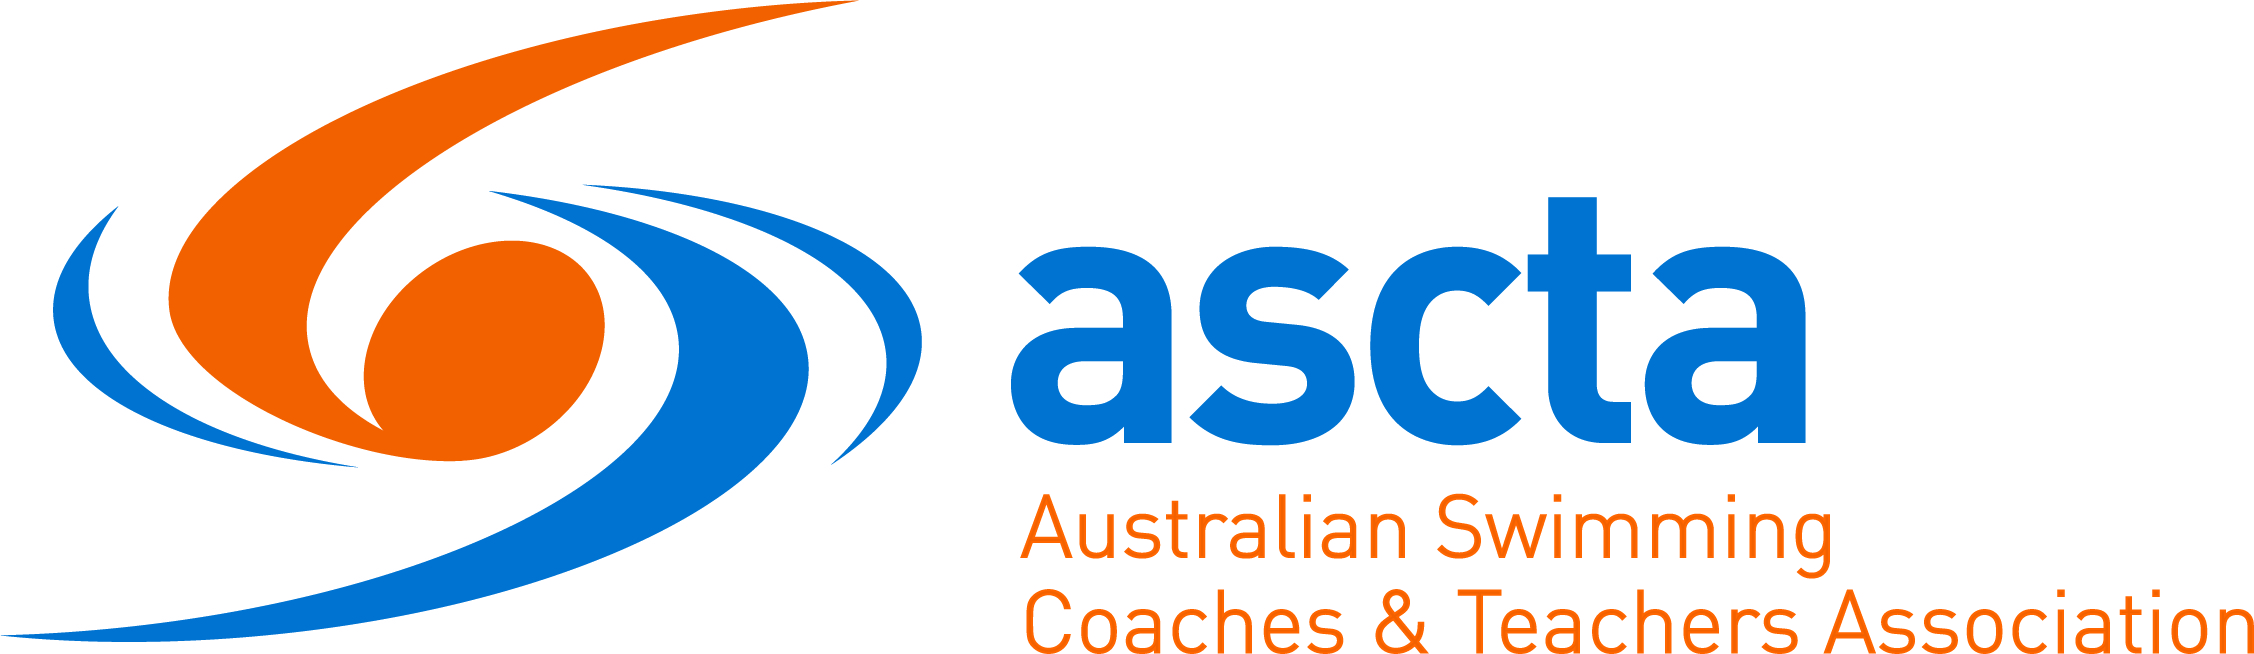 Australian Swimming Coaches & Teachers Association